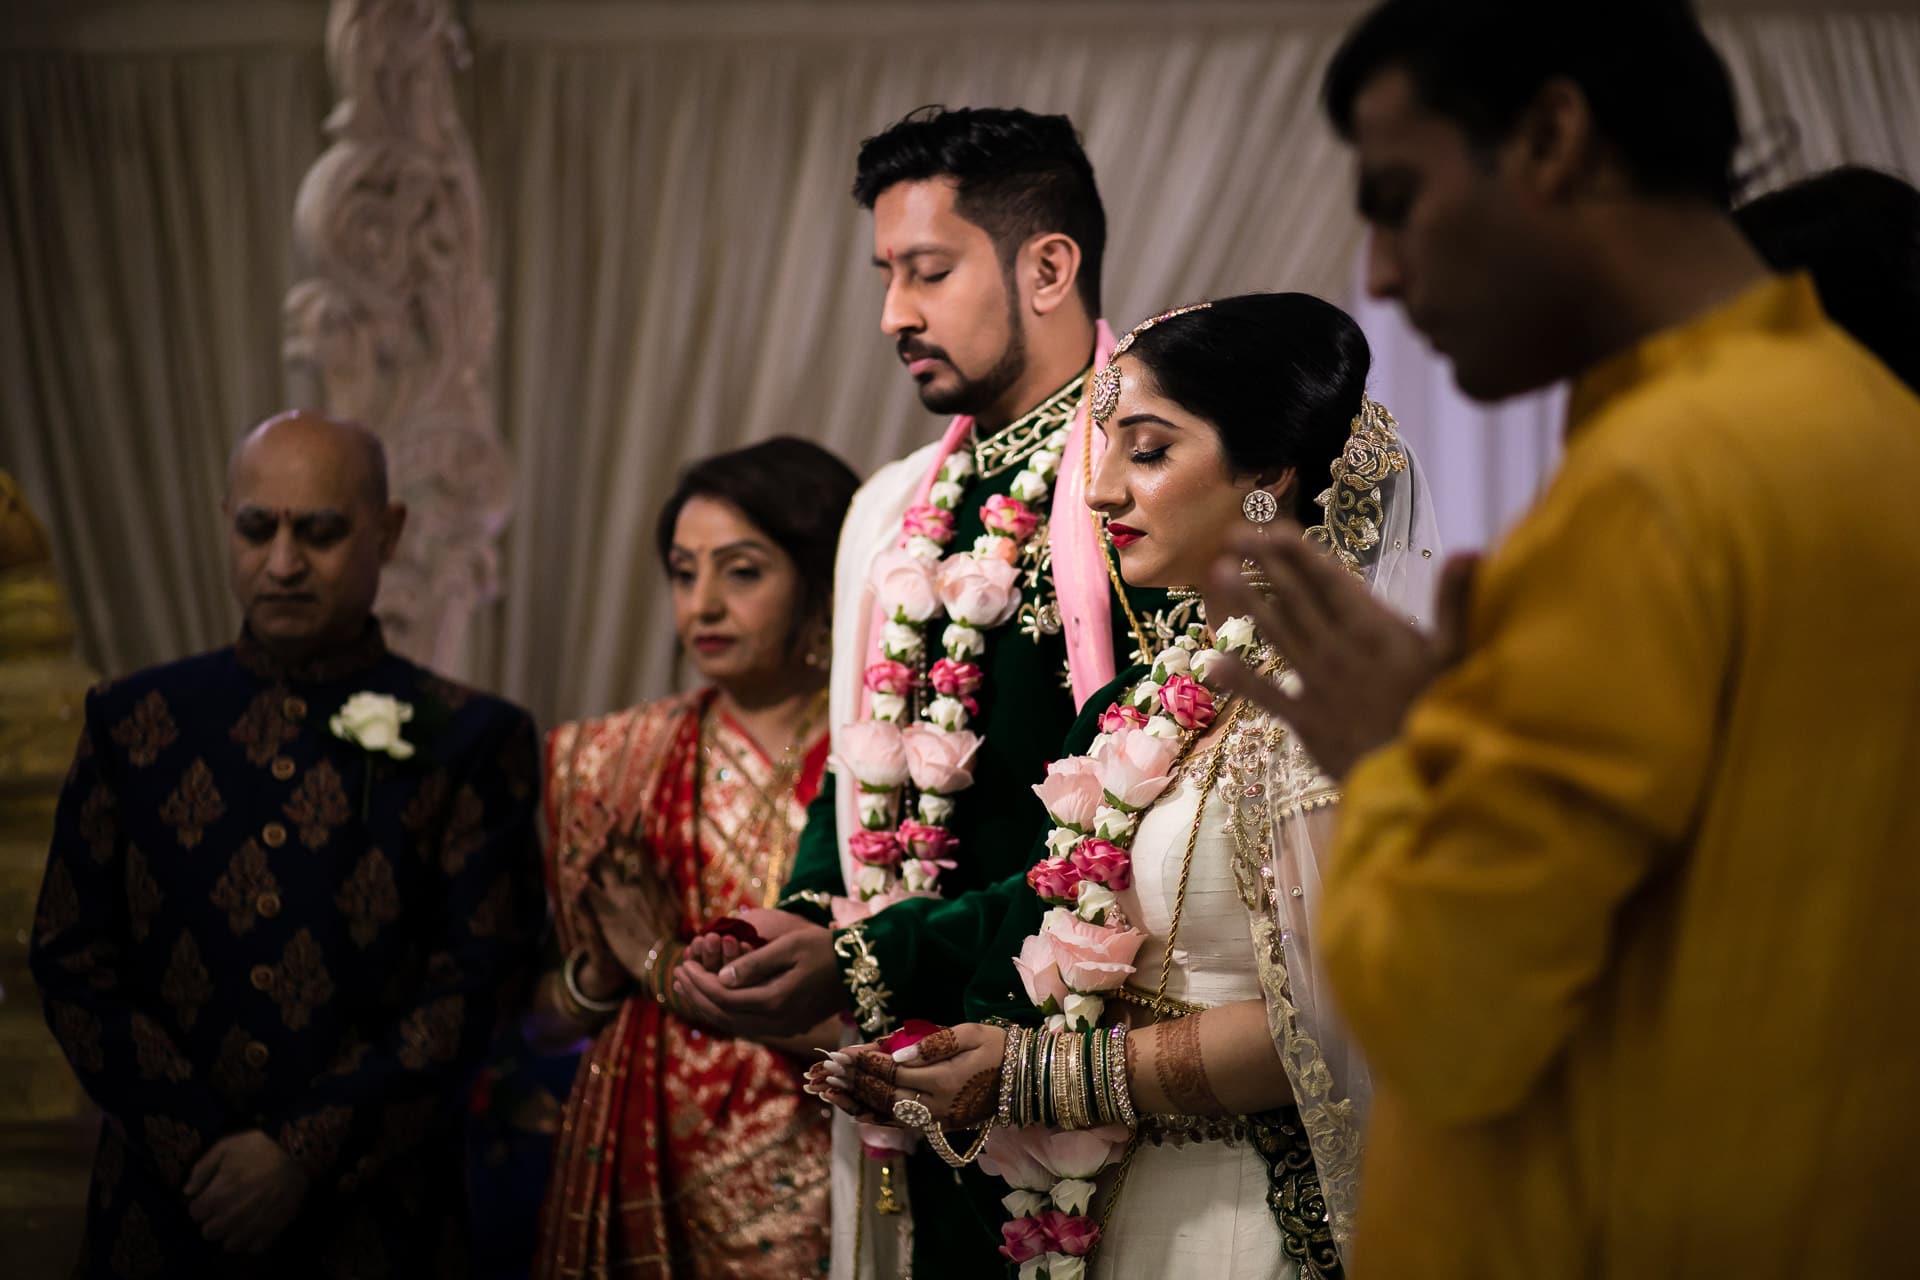 Prayers during Hindu wedding ceremony